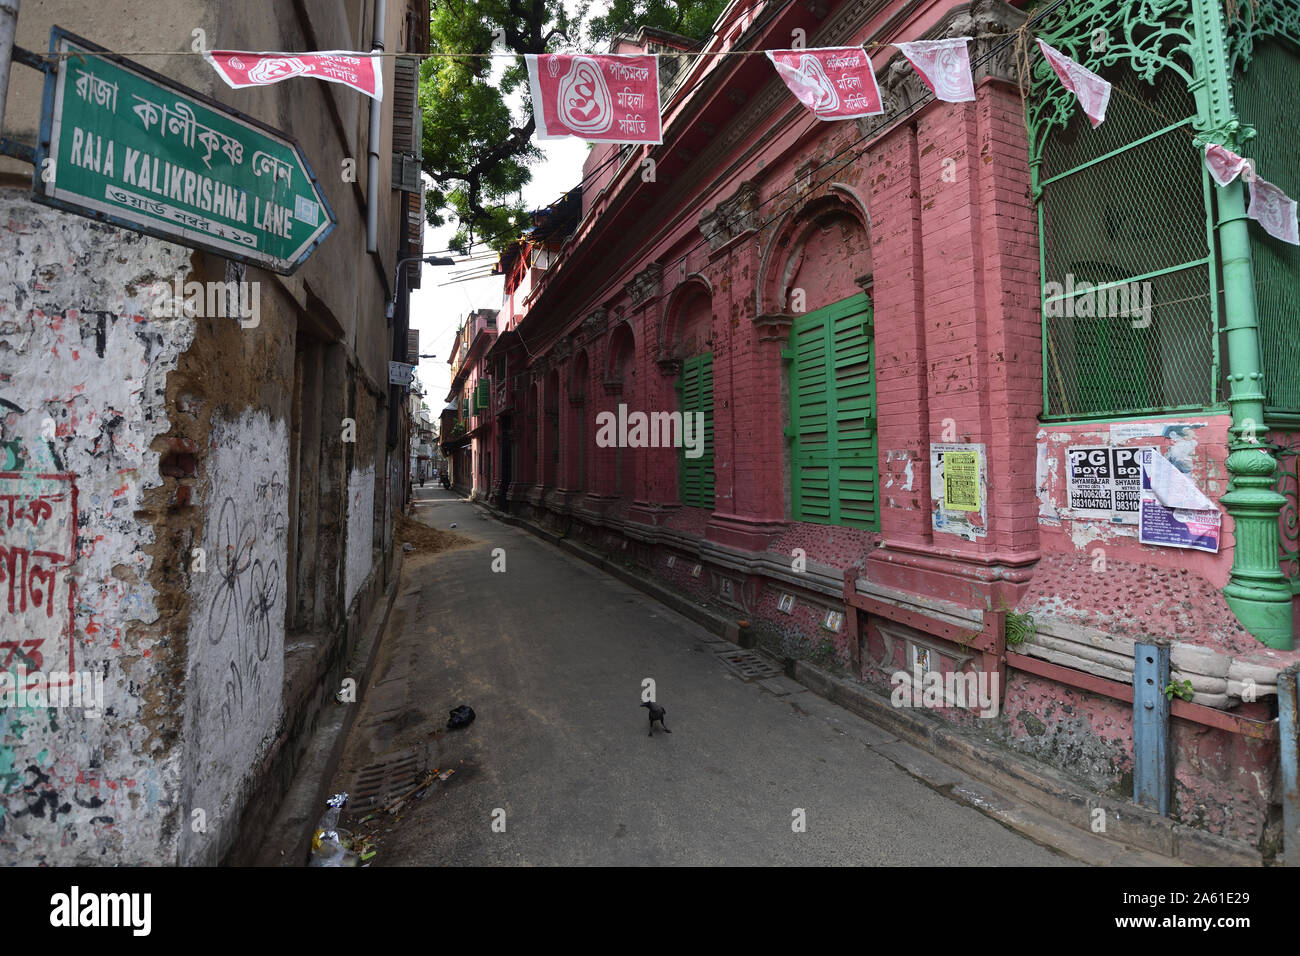 Raja Kalikrishna Lane. Shobhabazar, Kolkata, West Bengal, India. Banque D'Images